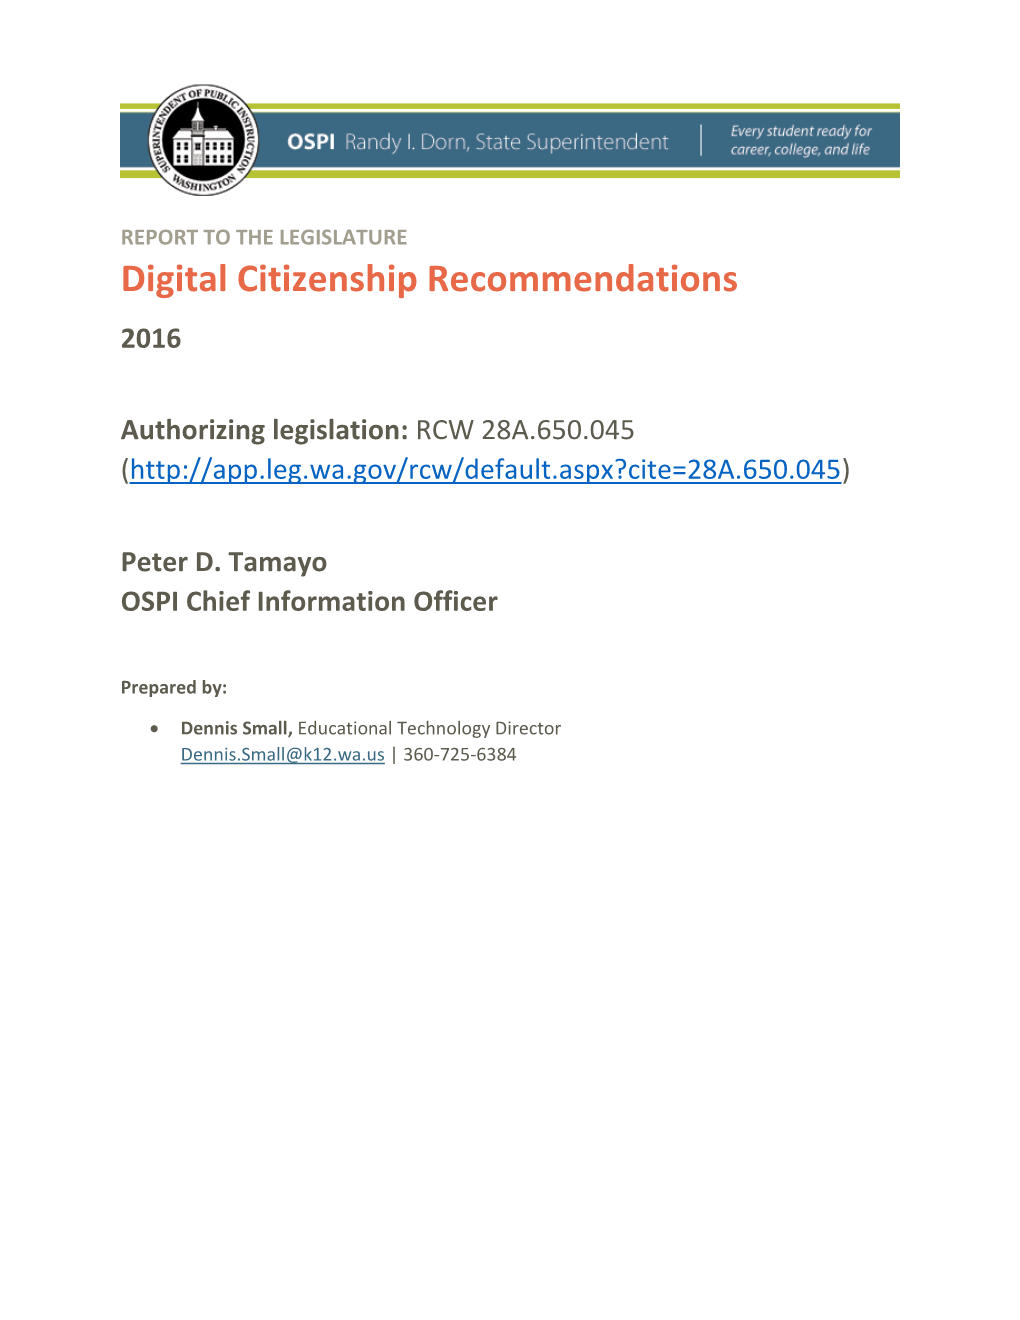 2016 Digital Citizenship Recommendations Report to Legislature